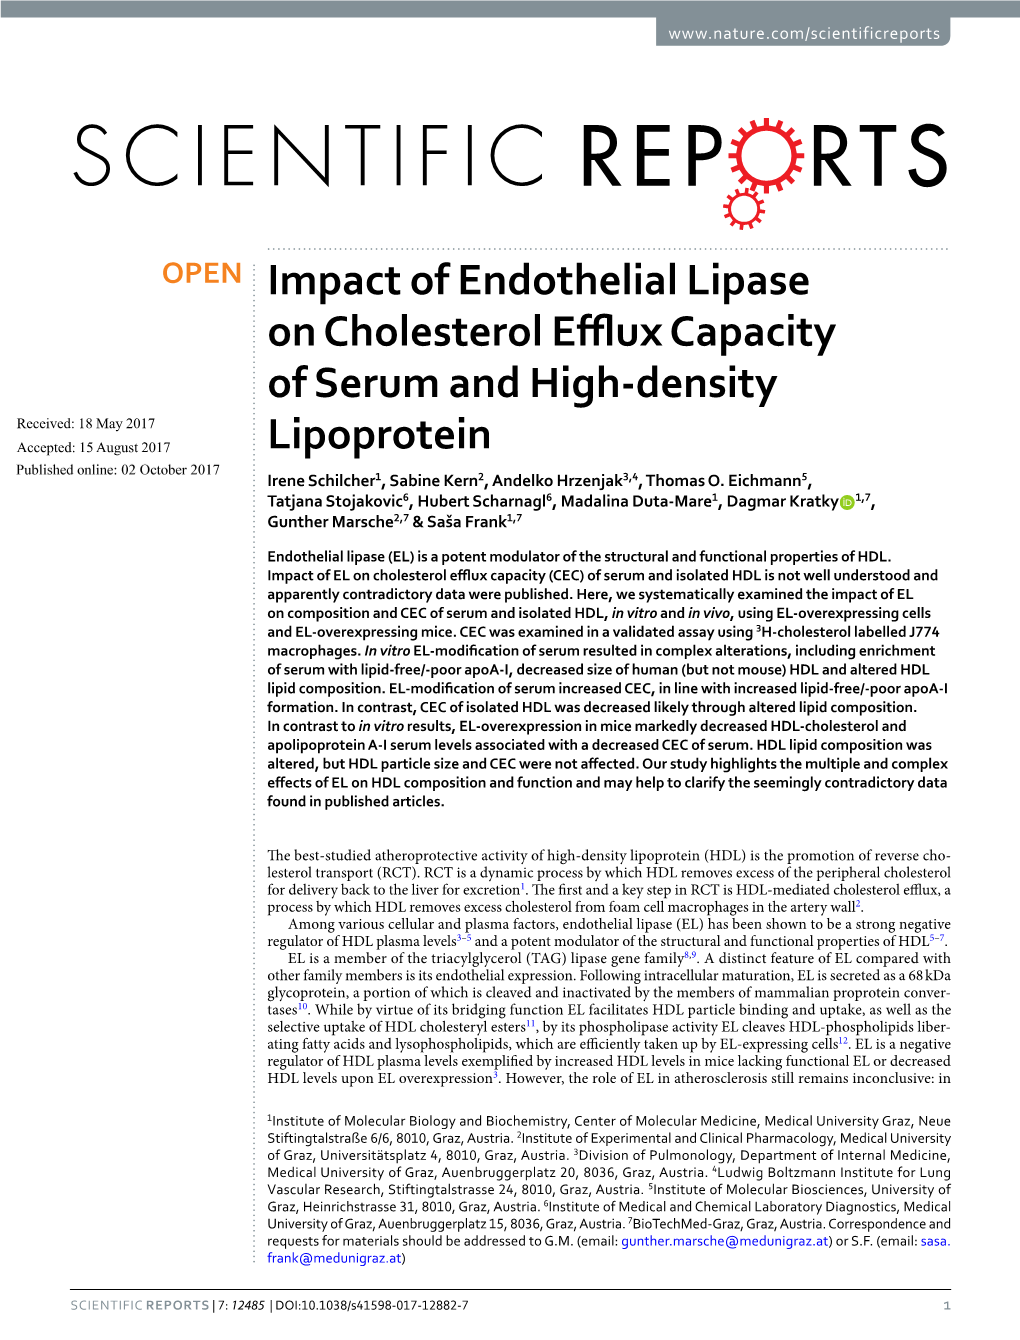 Impact of Endothelial Lipase on Cholesterol Efflux Capacity Of